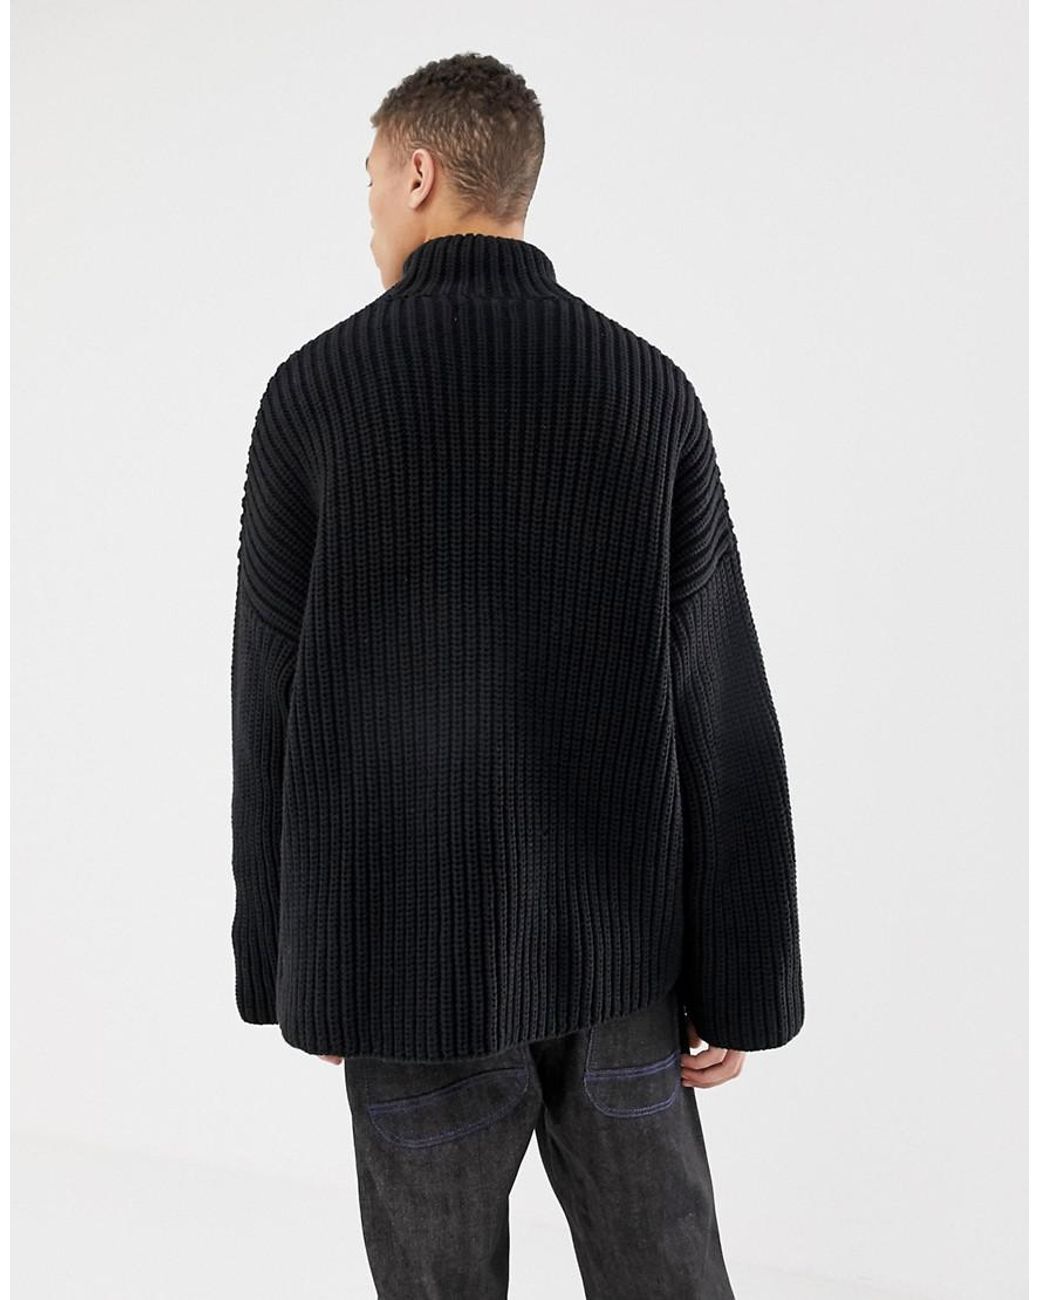 ASOS Oversized Sweater In Chunky Black Knit for Men | Lyst